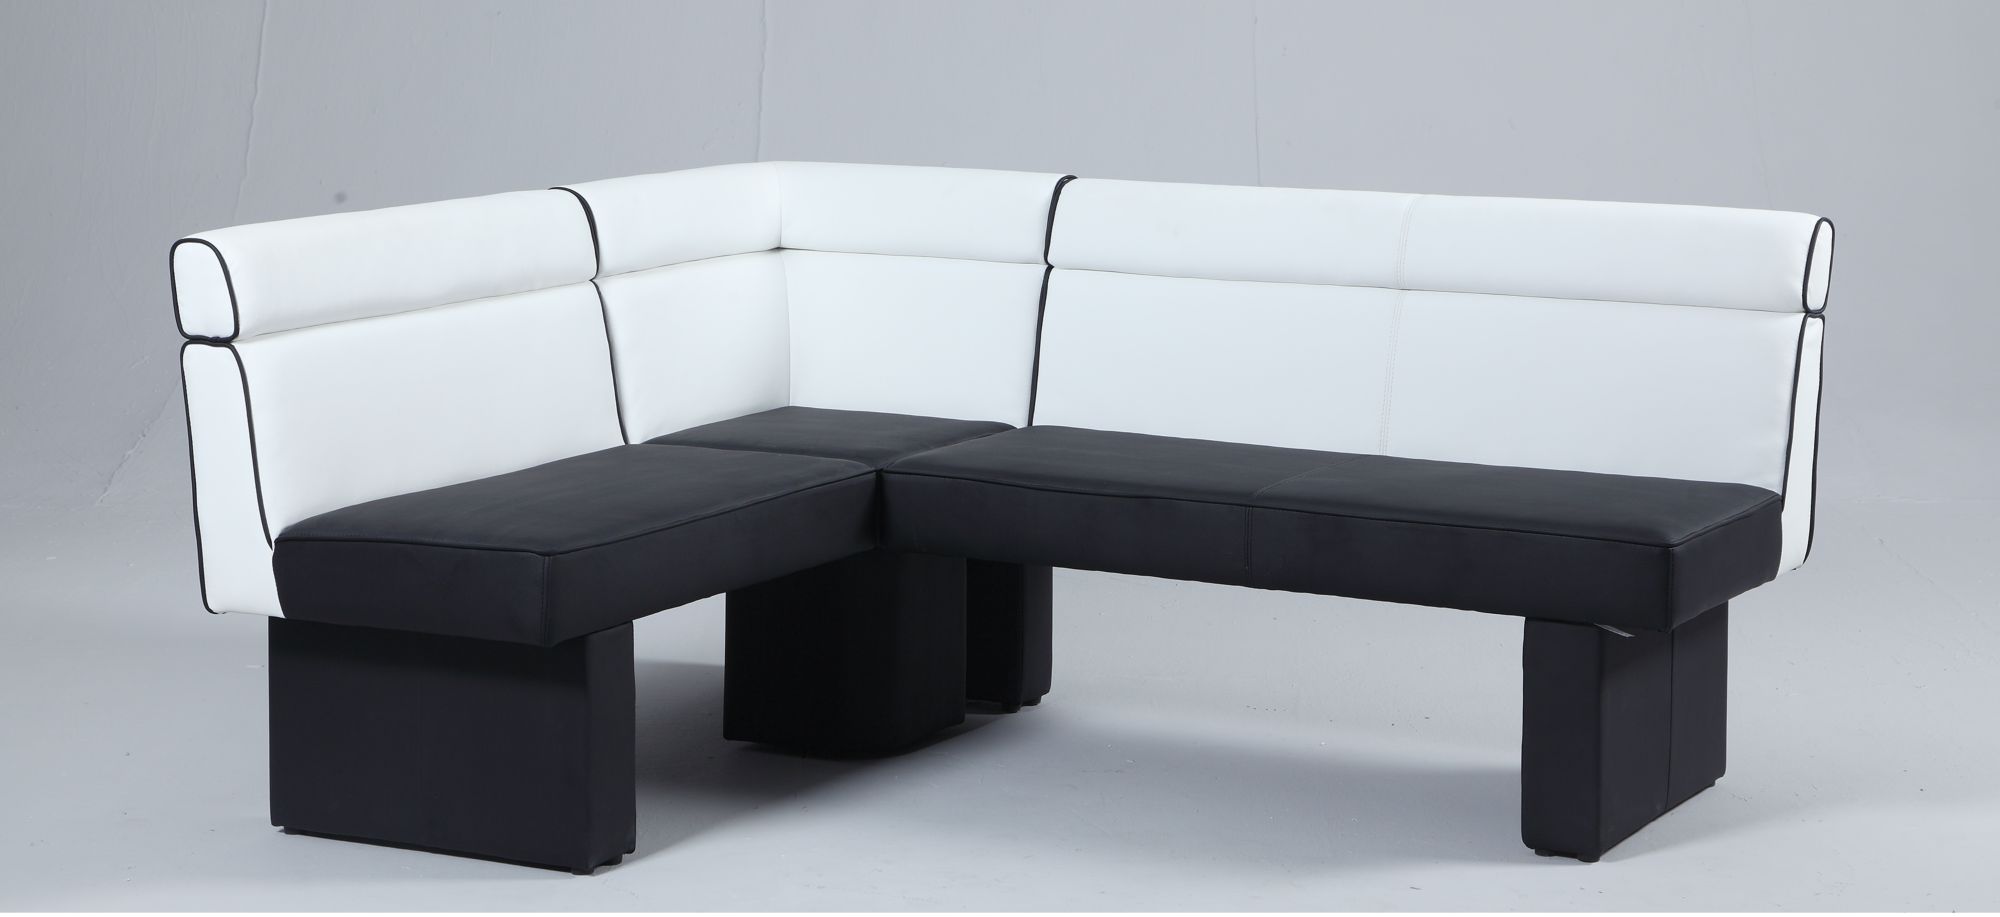 Natasha Corner Dining Bench in White / Black by Chintaly Imports